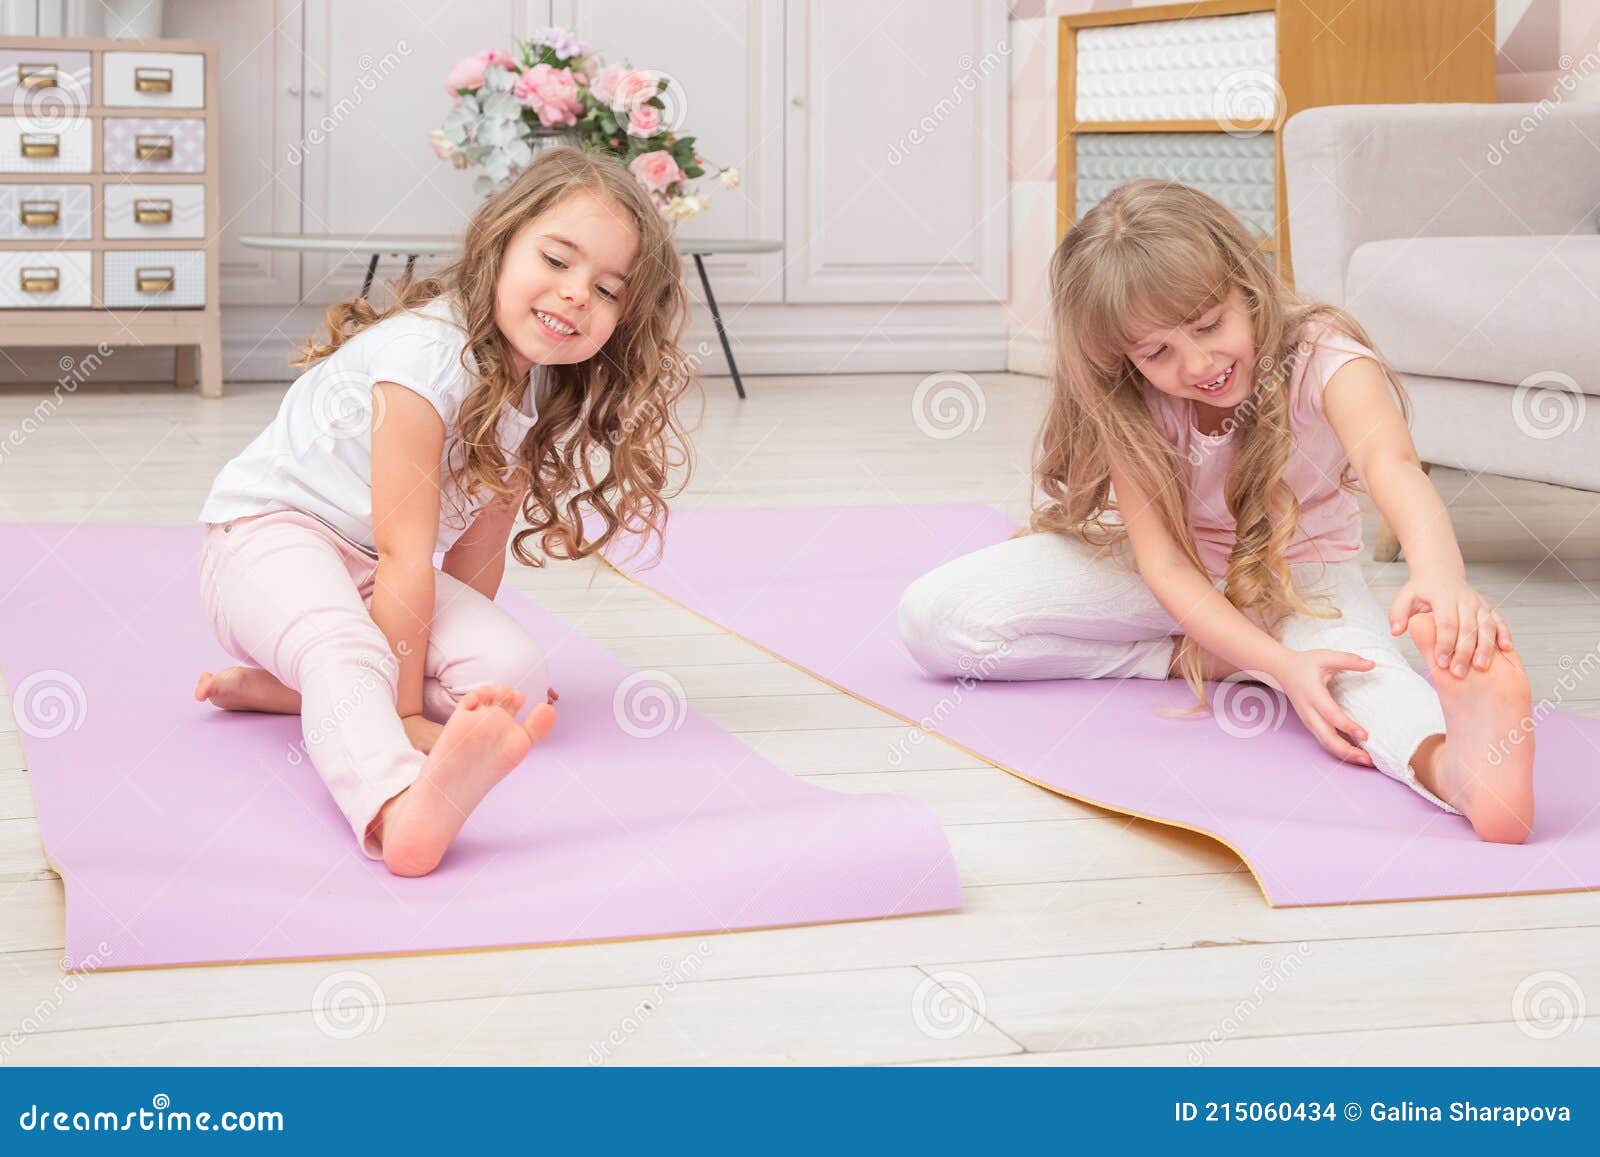 https://thumbs.dreamstime.com/z/full-length-front-view-smiling-cute-playful-little-preschool-girls-sitting-yoga-mat-do-various-exercises-happy-kids-practicing-215060434.jpg